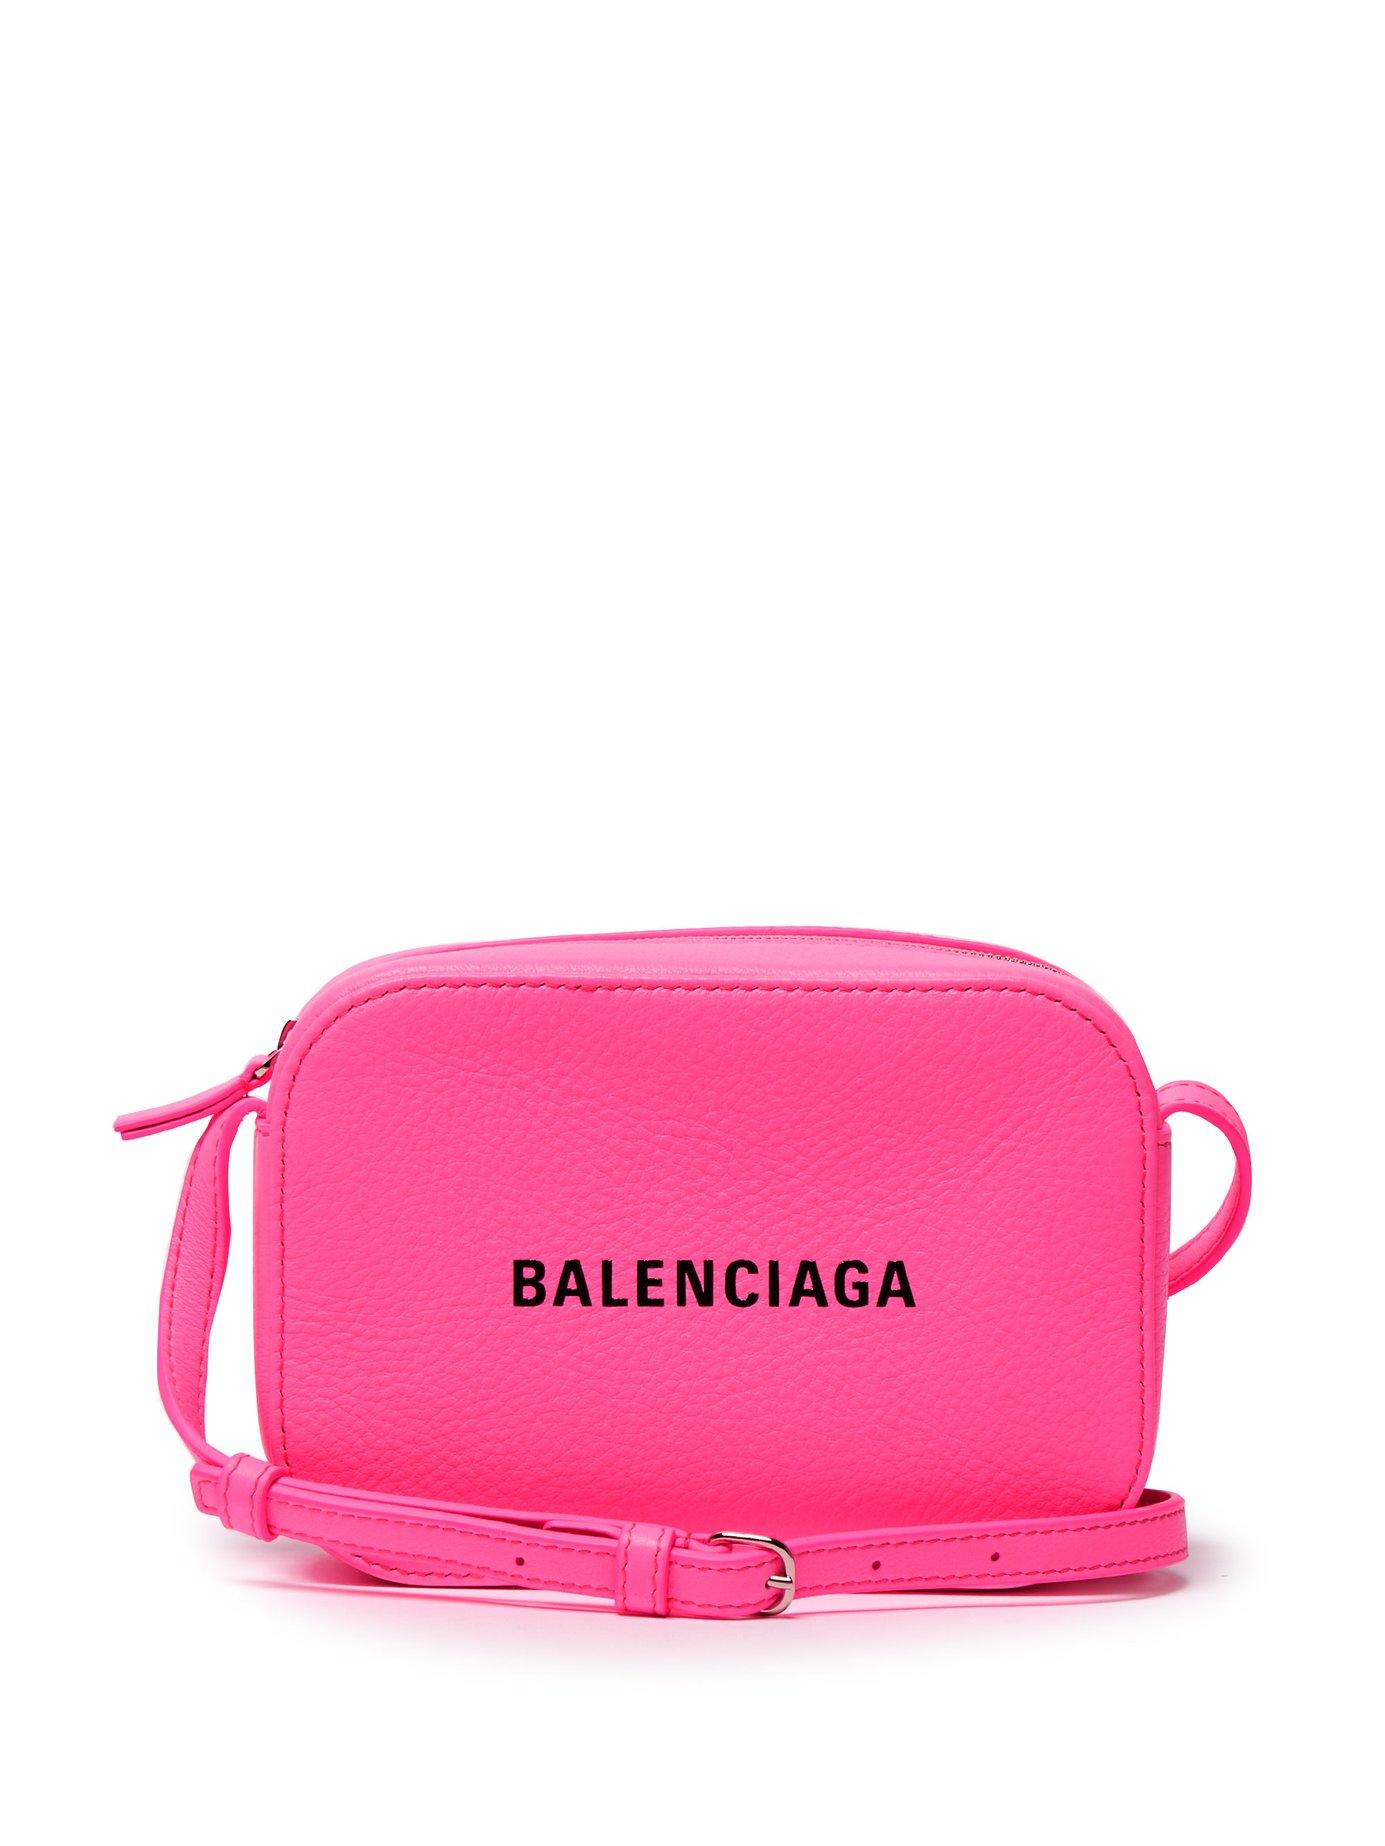 Balenciaga Wallet Crossbody Handbags | semashow.com